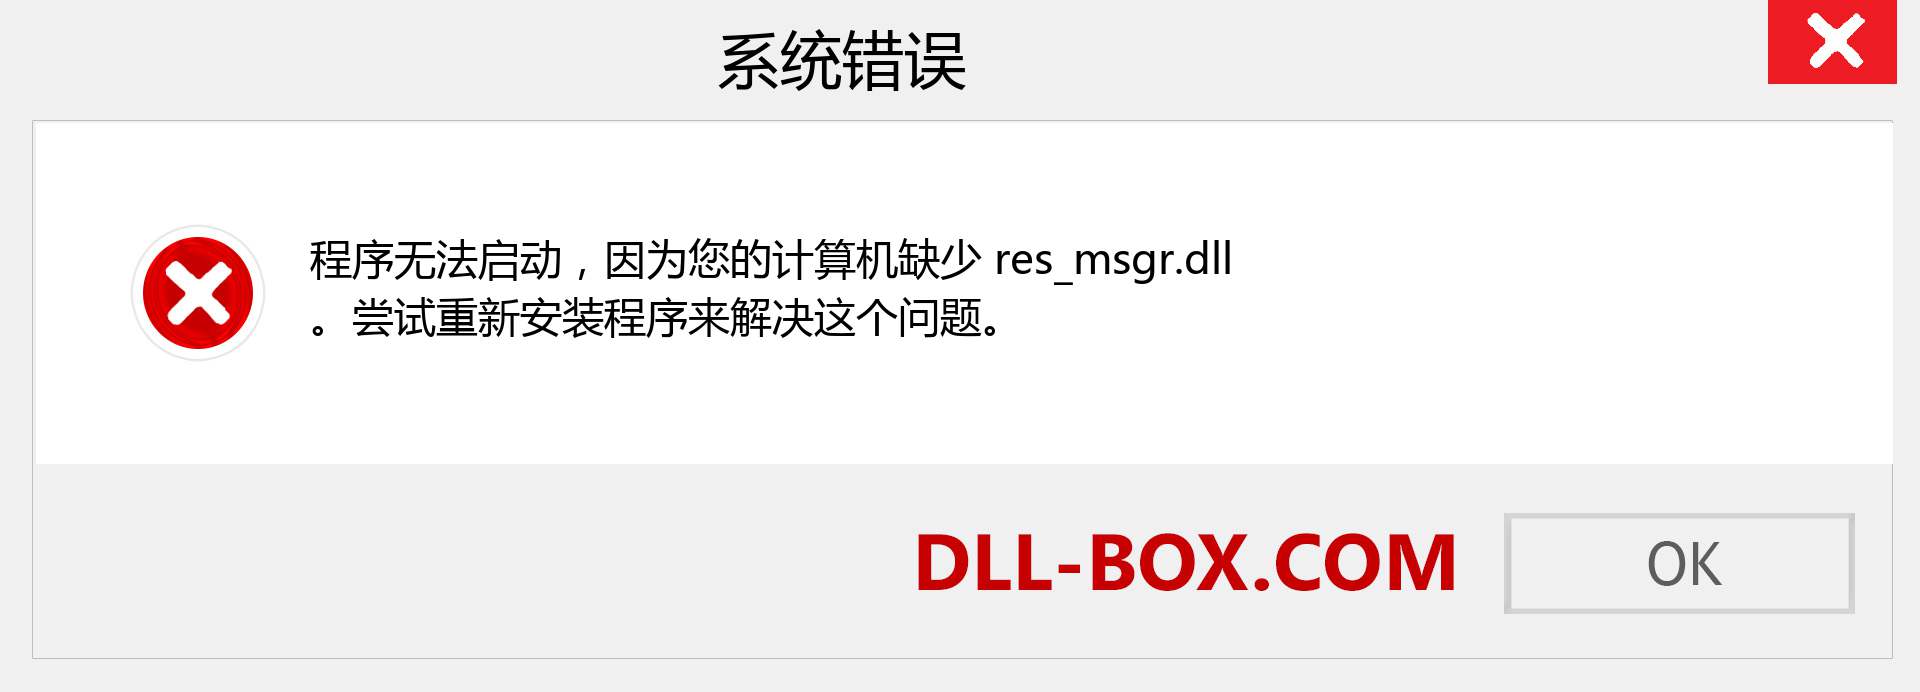 res_msgr.dll 文件丢失？。 适用于 Windows 7、8、10 的下载 - 修复 Windows、照片、图像上的 res_msgr dll 丢失错误